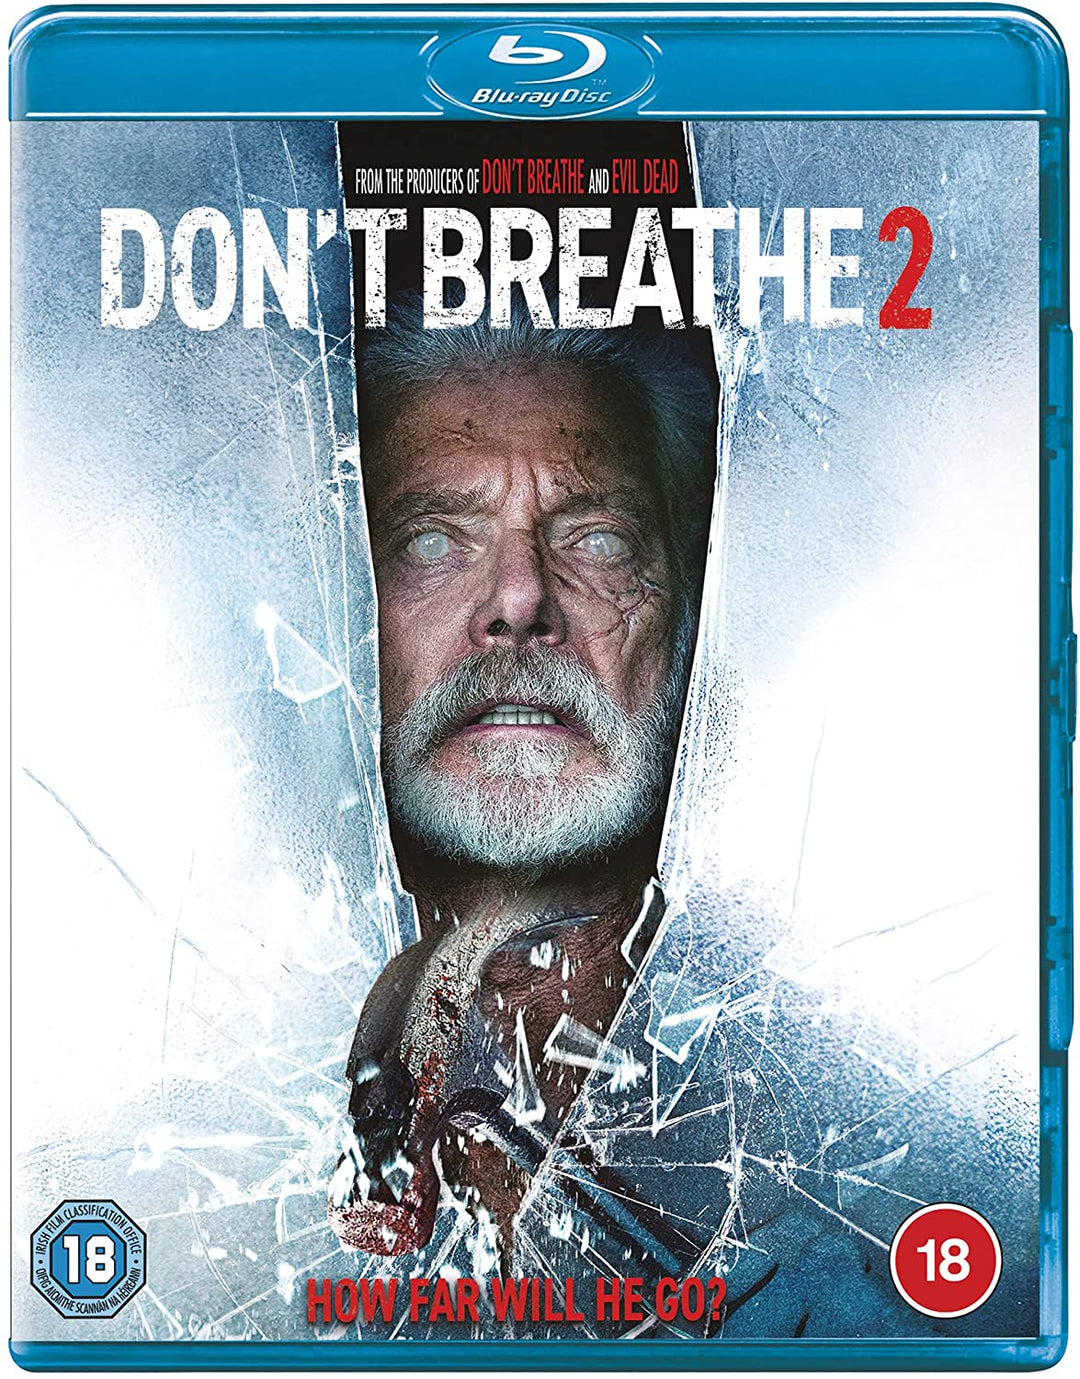 Don't Breathe 2 [2021] - Horror/Thriller [Blu-ray]